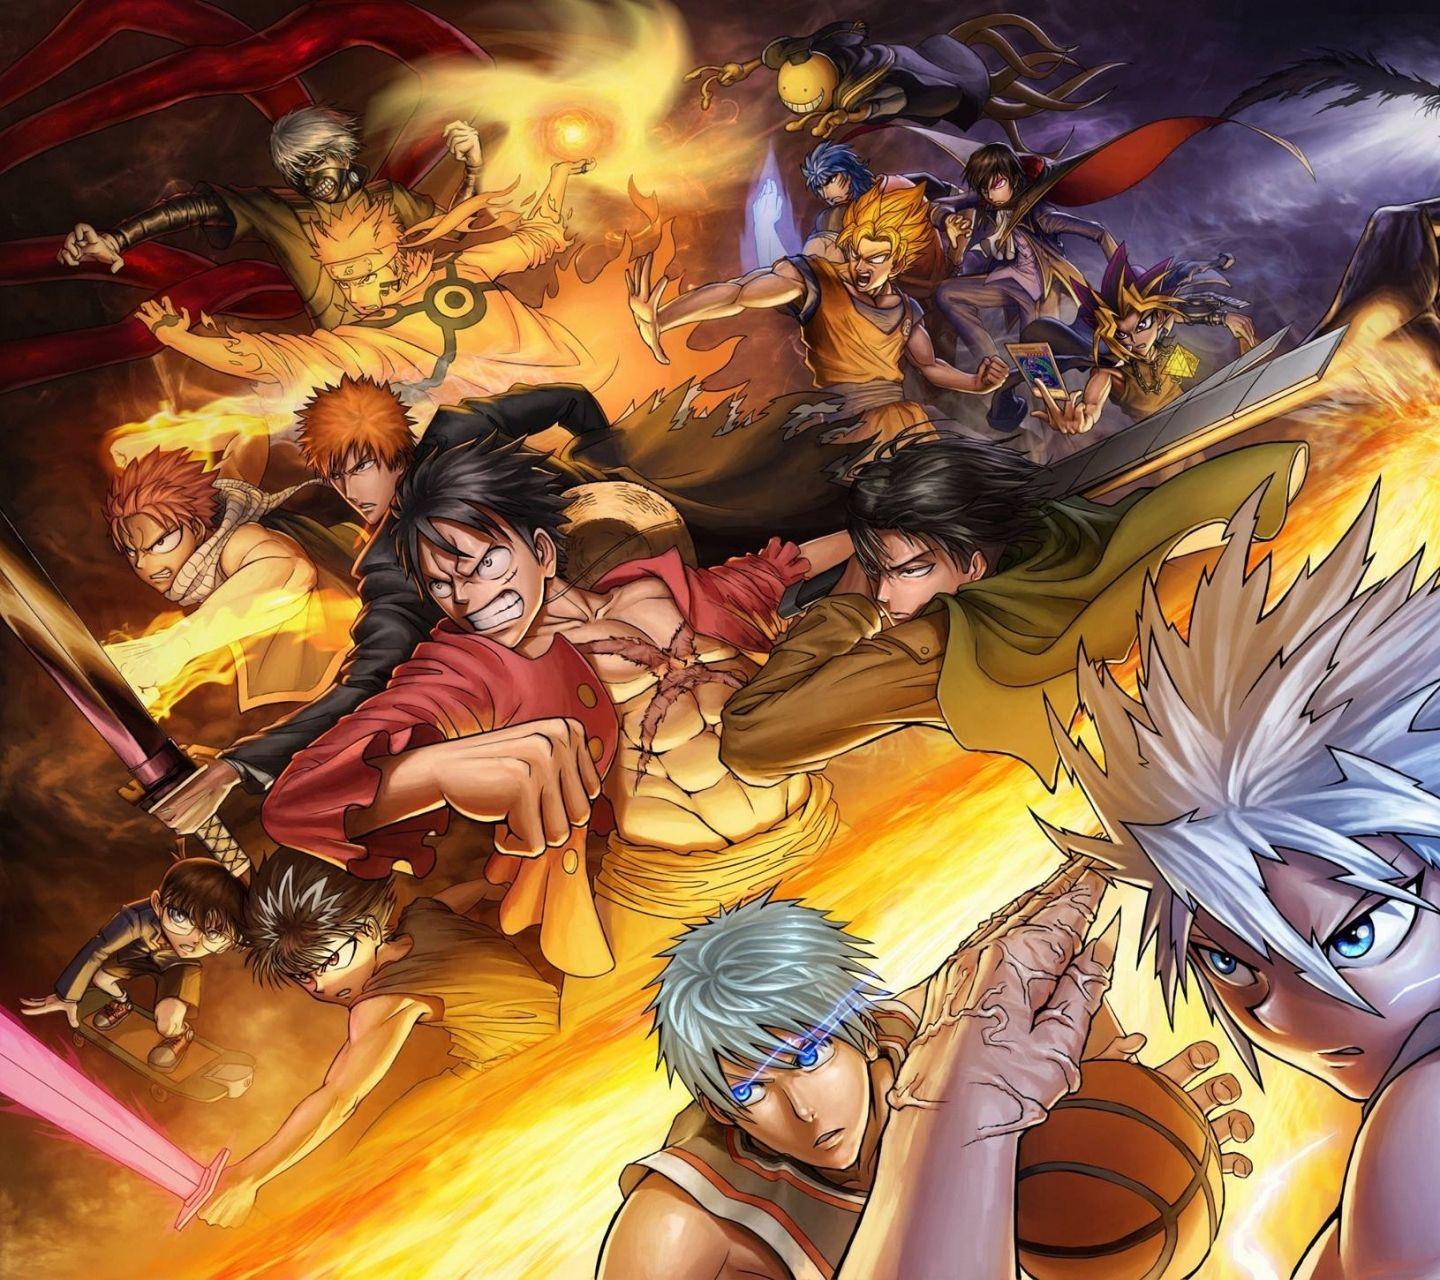 anime crossover wallpaper